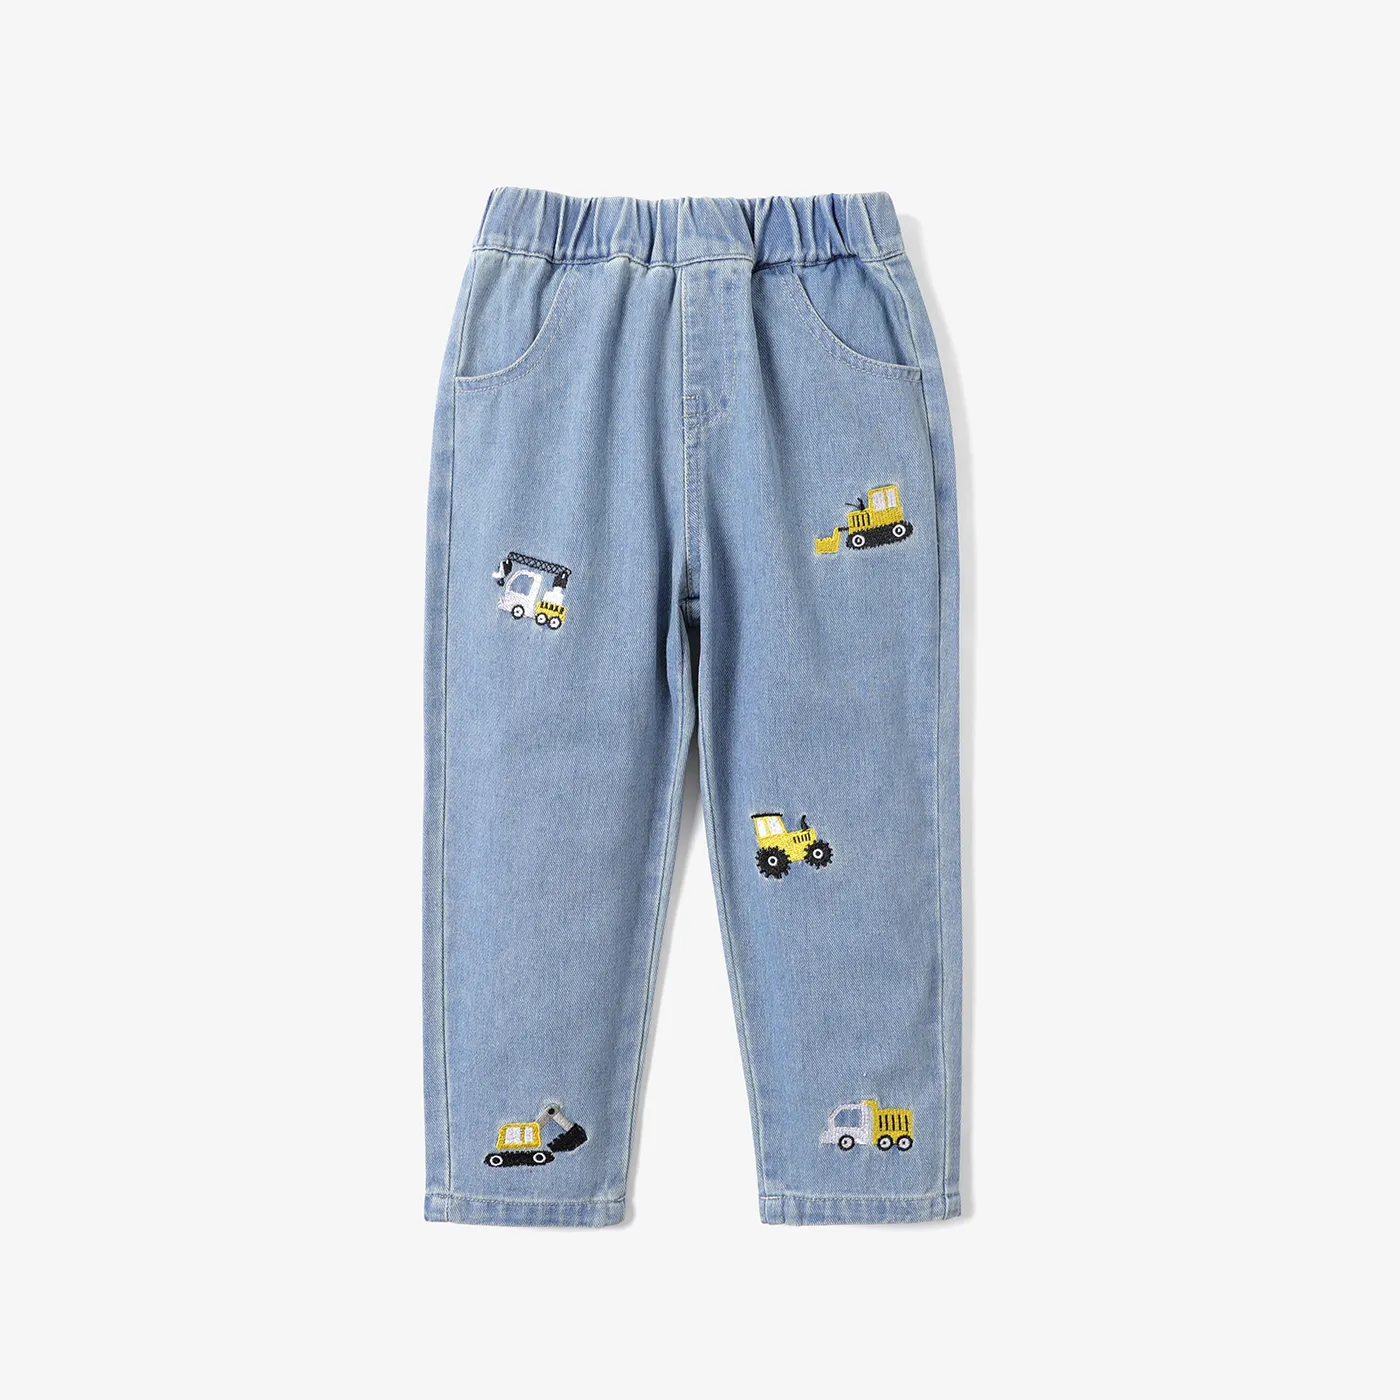 Toddler Boy Playful 100% Cotton Vehicle Embroidered Denim Jeans